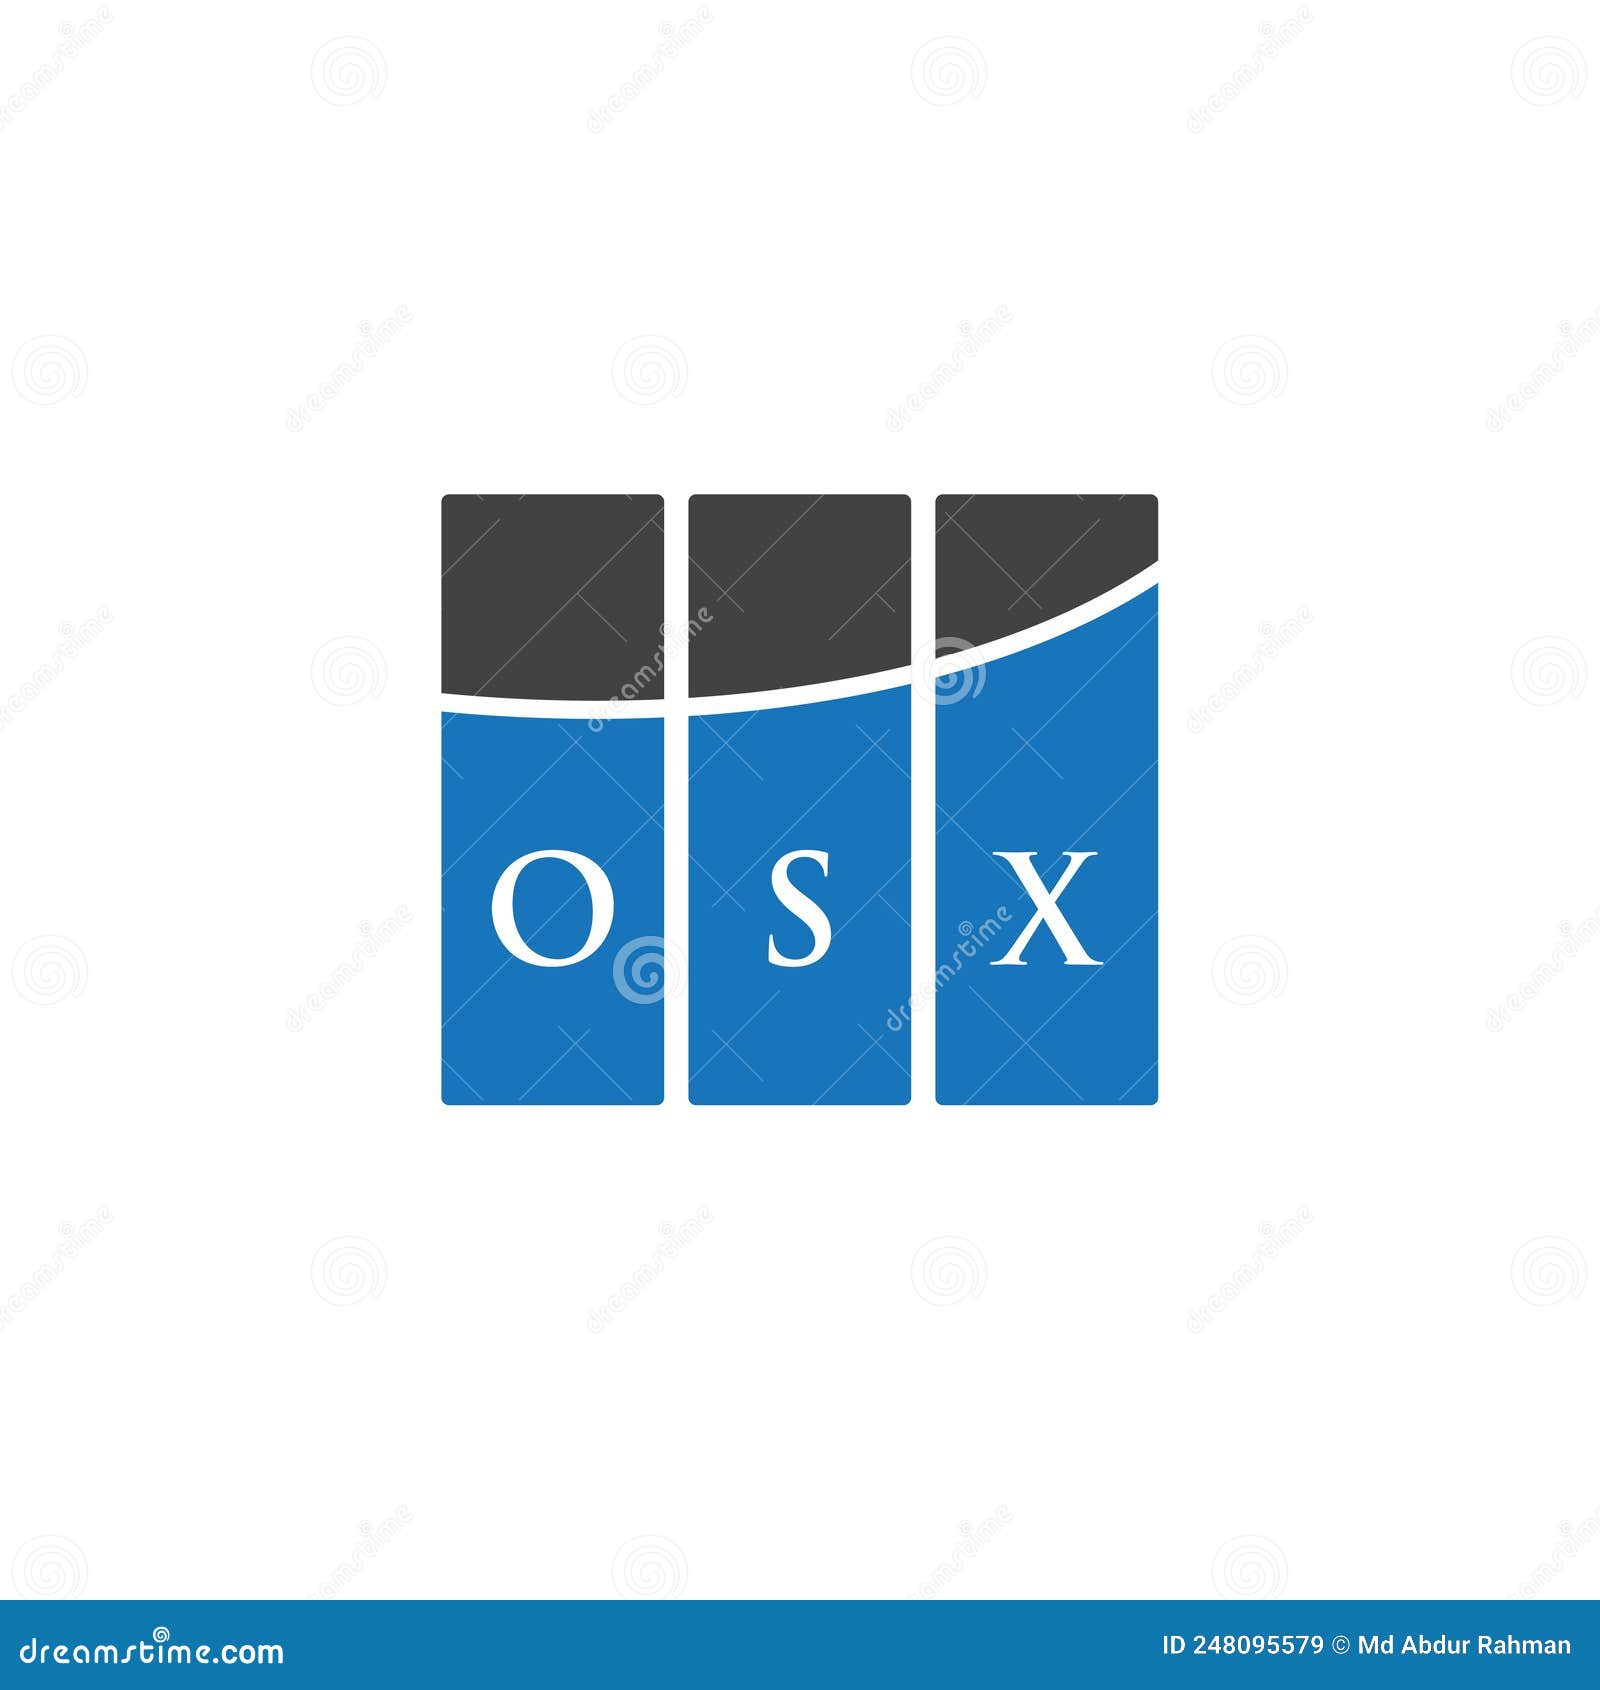 osx letter logo  on white background. osx creative initials letter logo concept. osx letter .osx letter logo  on